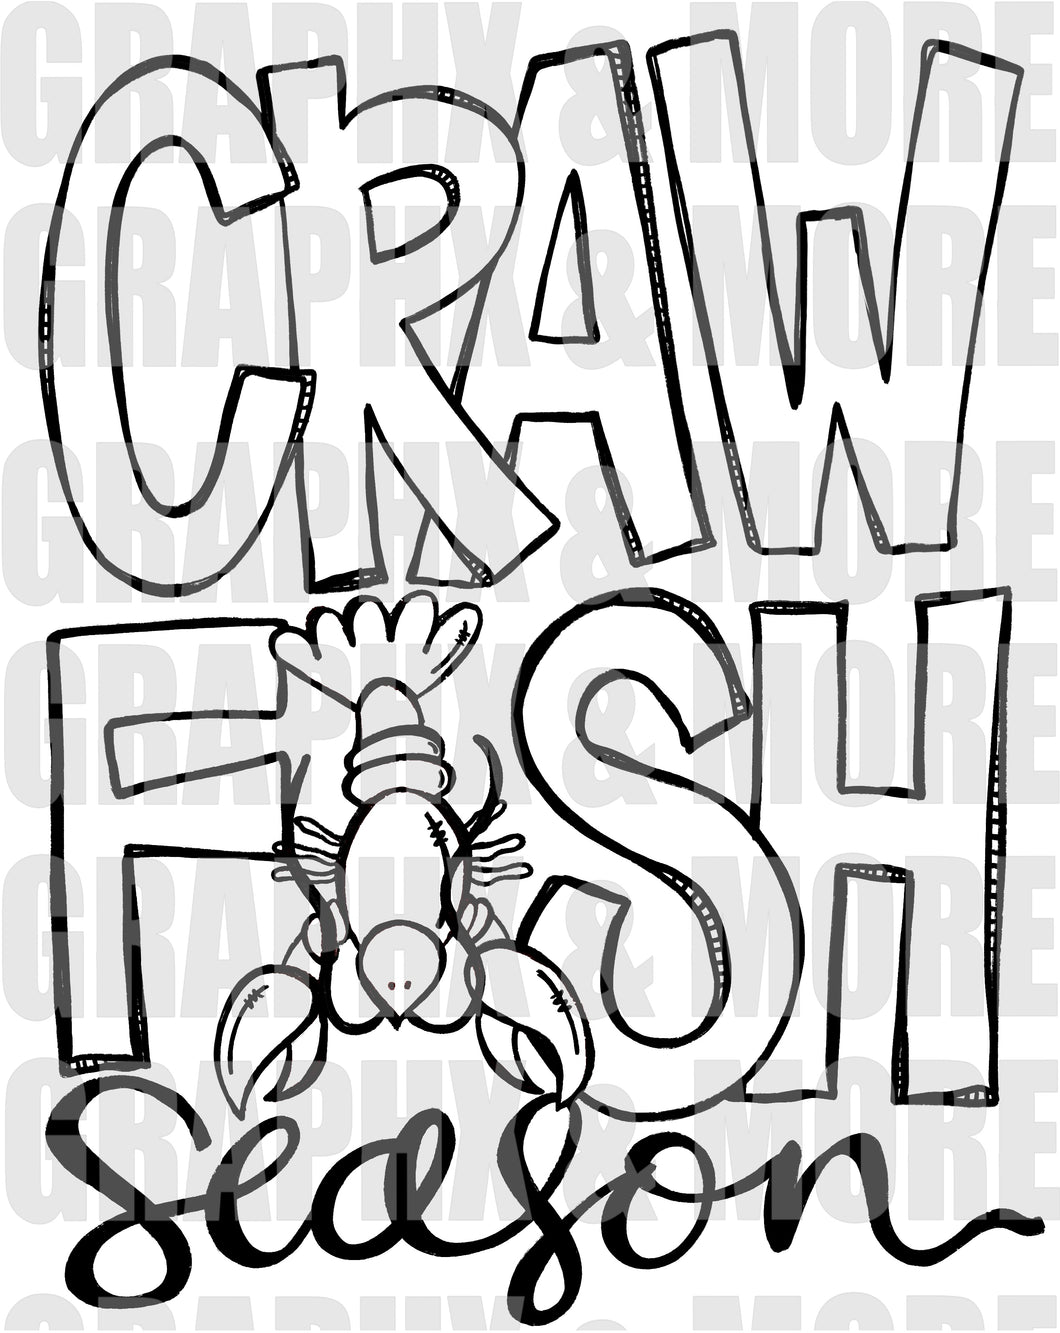 Single Color Crawfish Season PNG | Sublimation Design | Hand Drawn